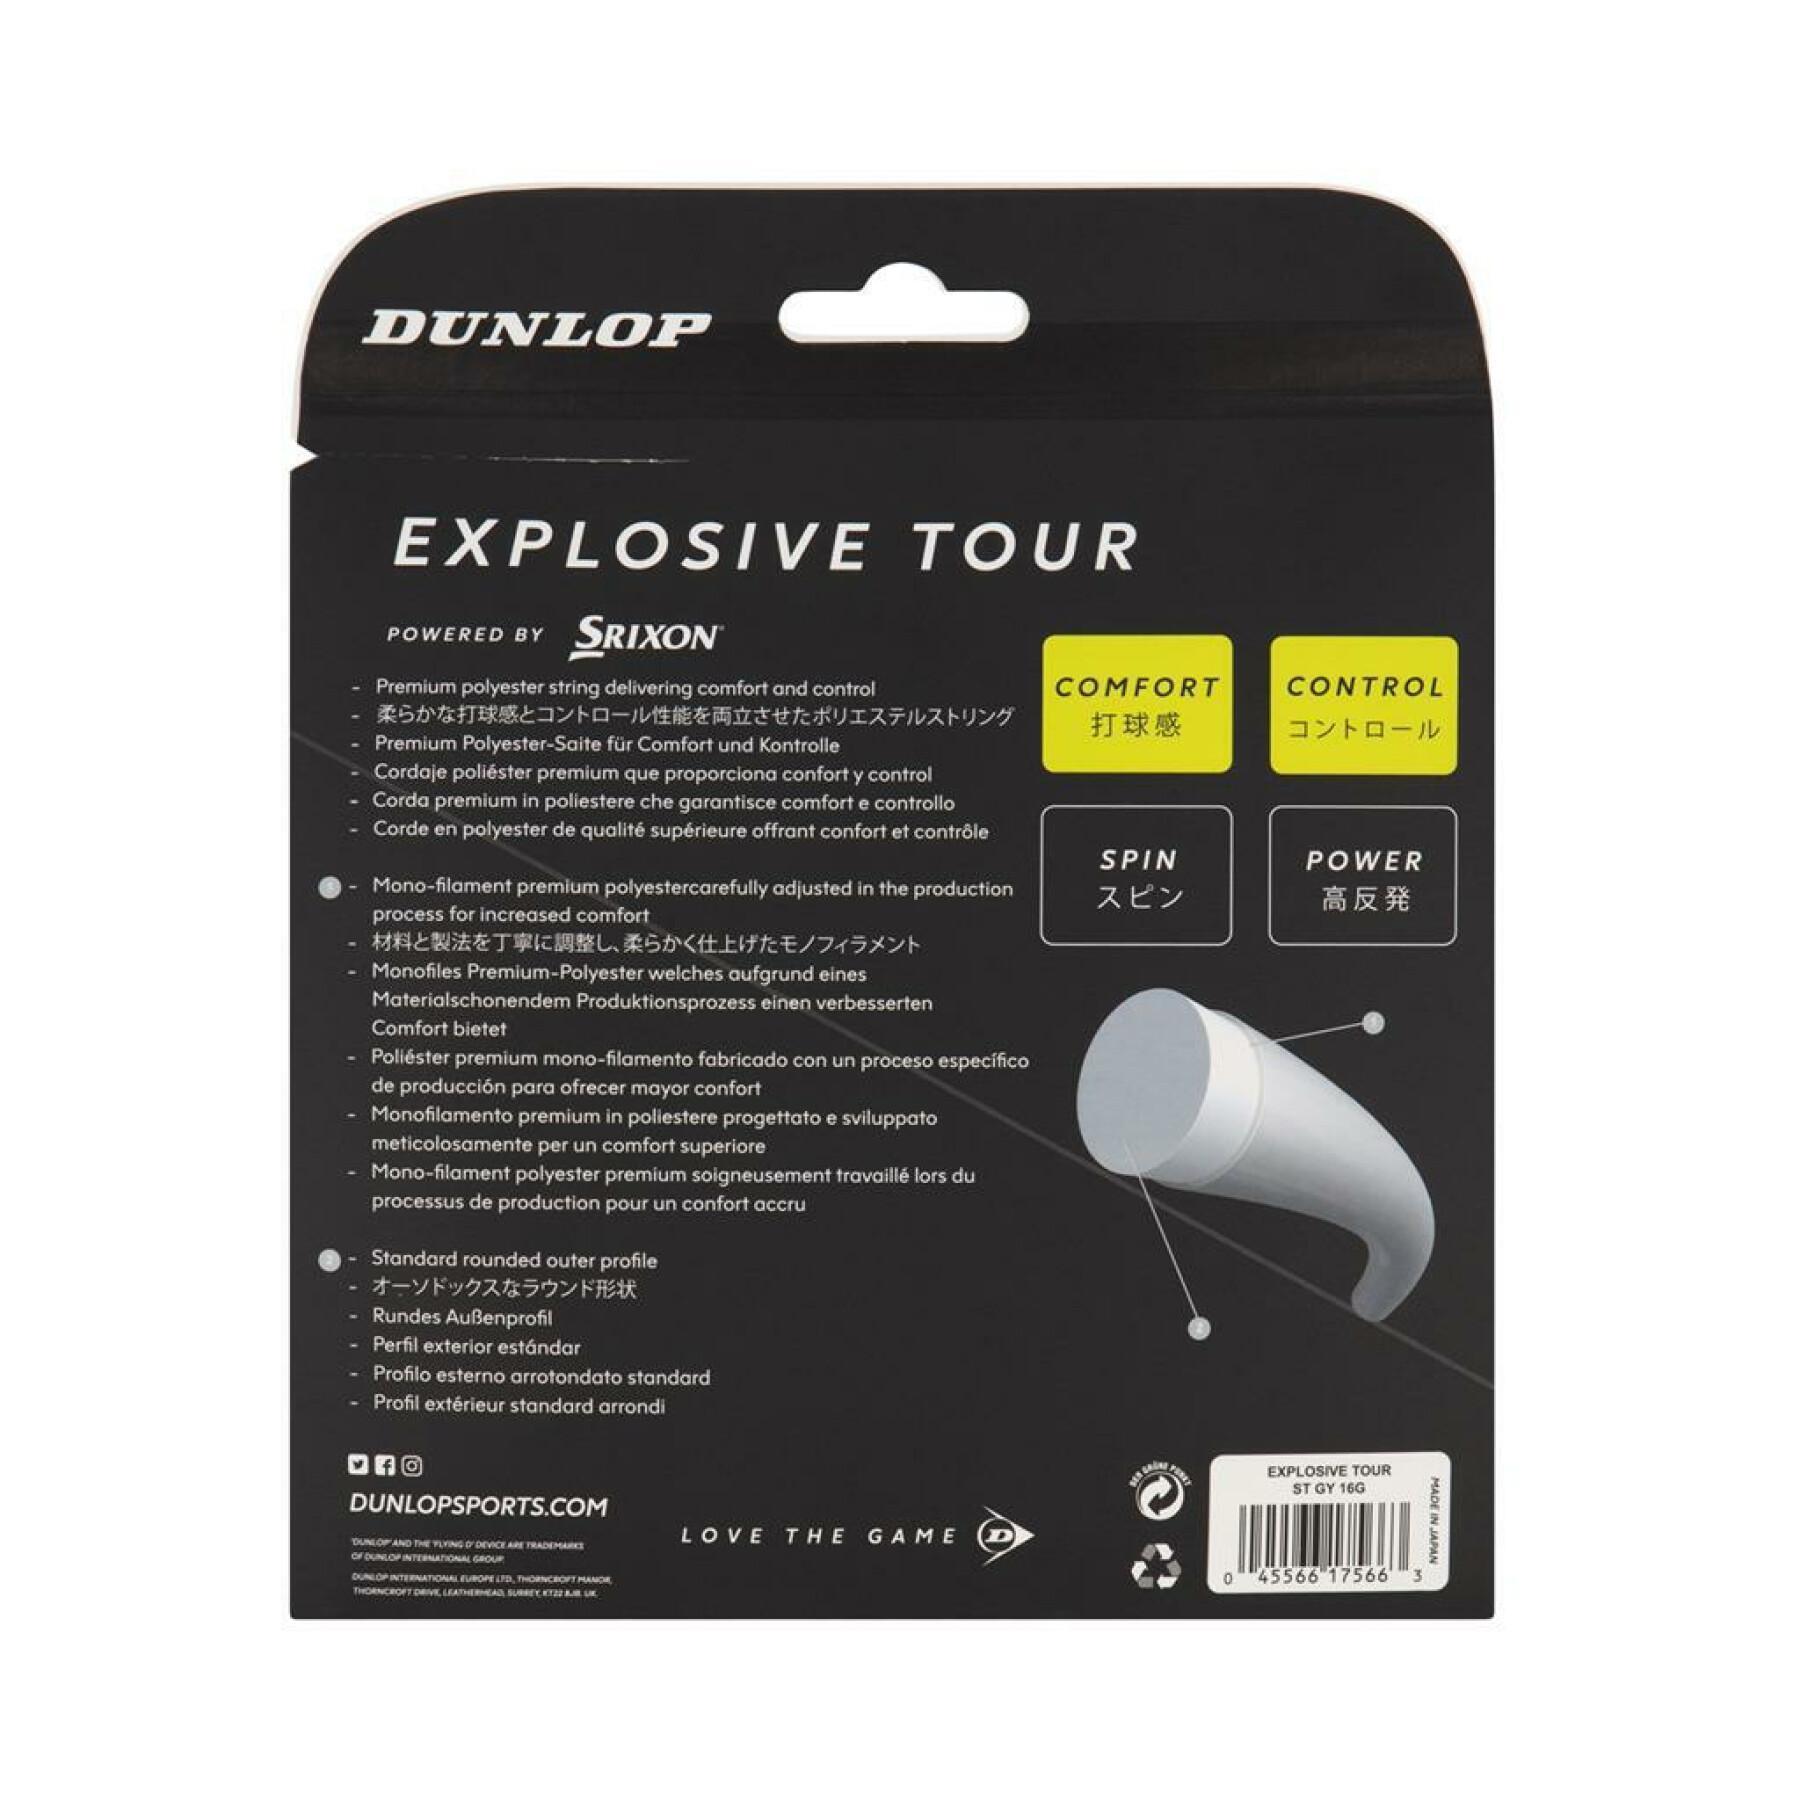 Rope Dunlop explosive tour